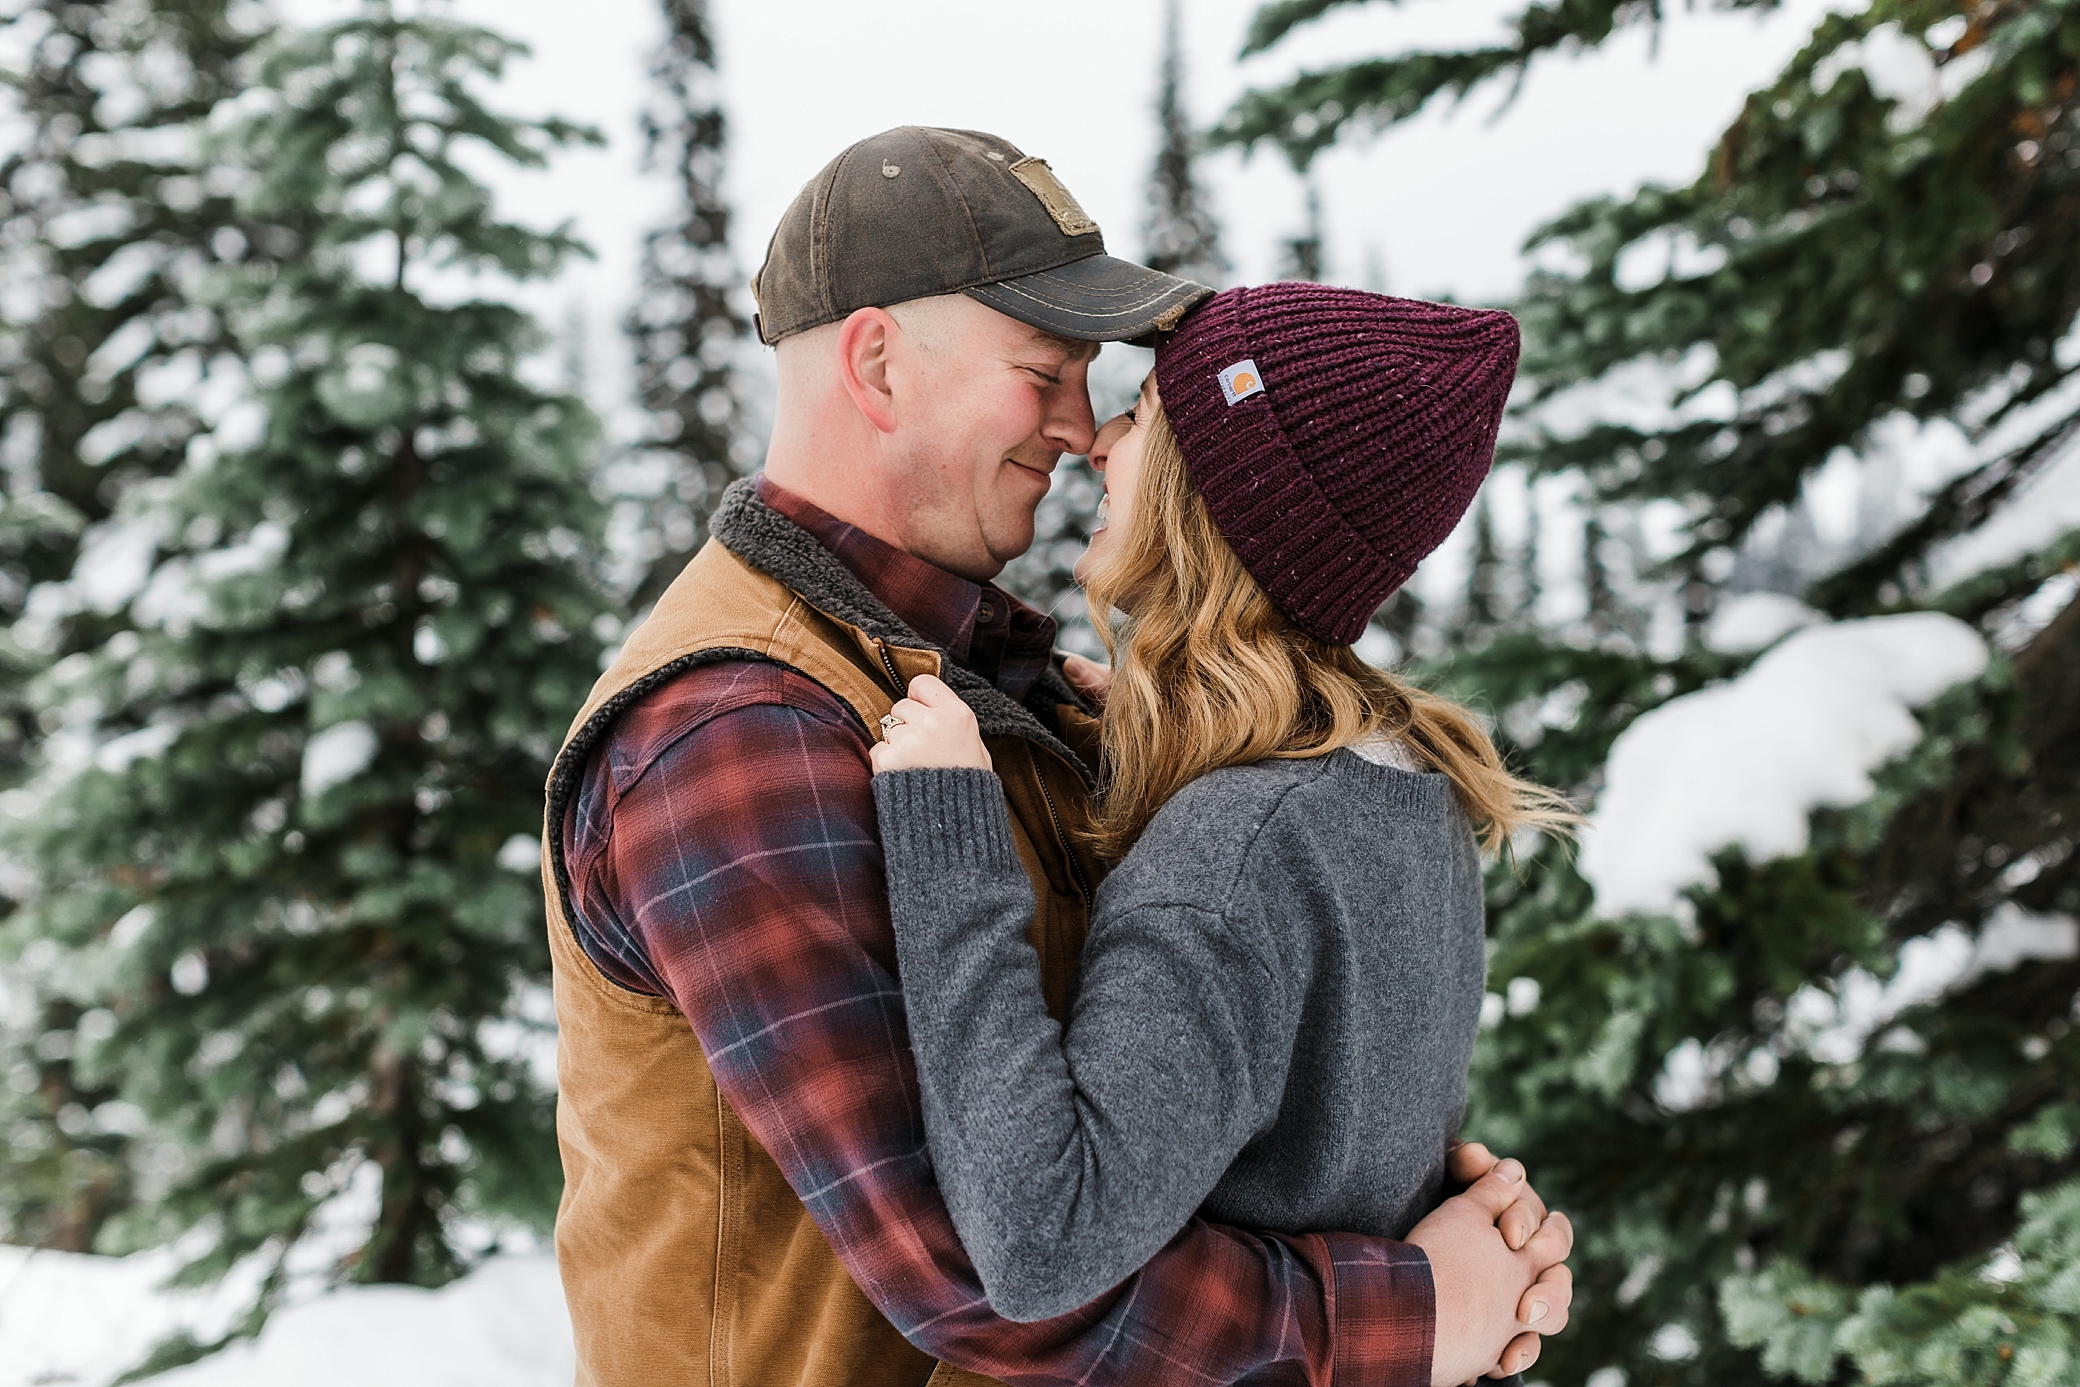 Couples Photoshoot in the Snow | Megan Montalvo Photography 